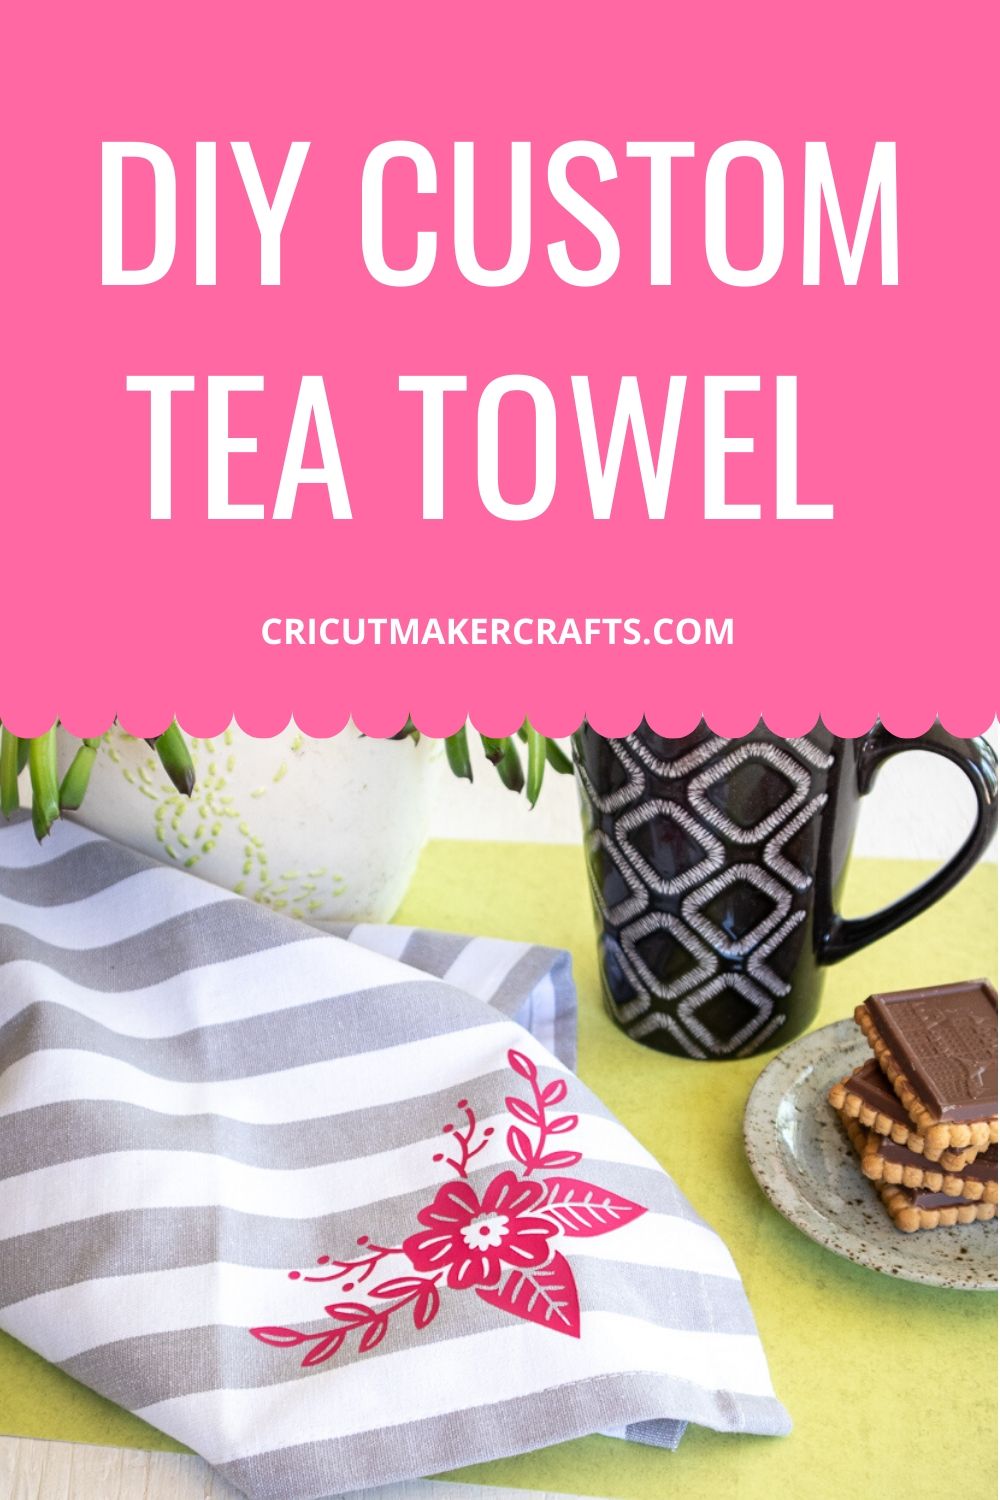 https://cutnmakecrafts.com/wp-content/uploads/2020/05/DIY-custom-tea-towel-with-cricut-joy-1.jpg